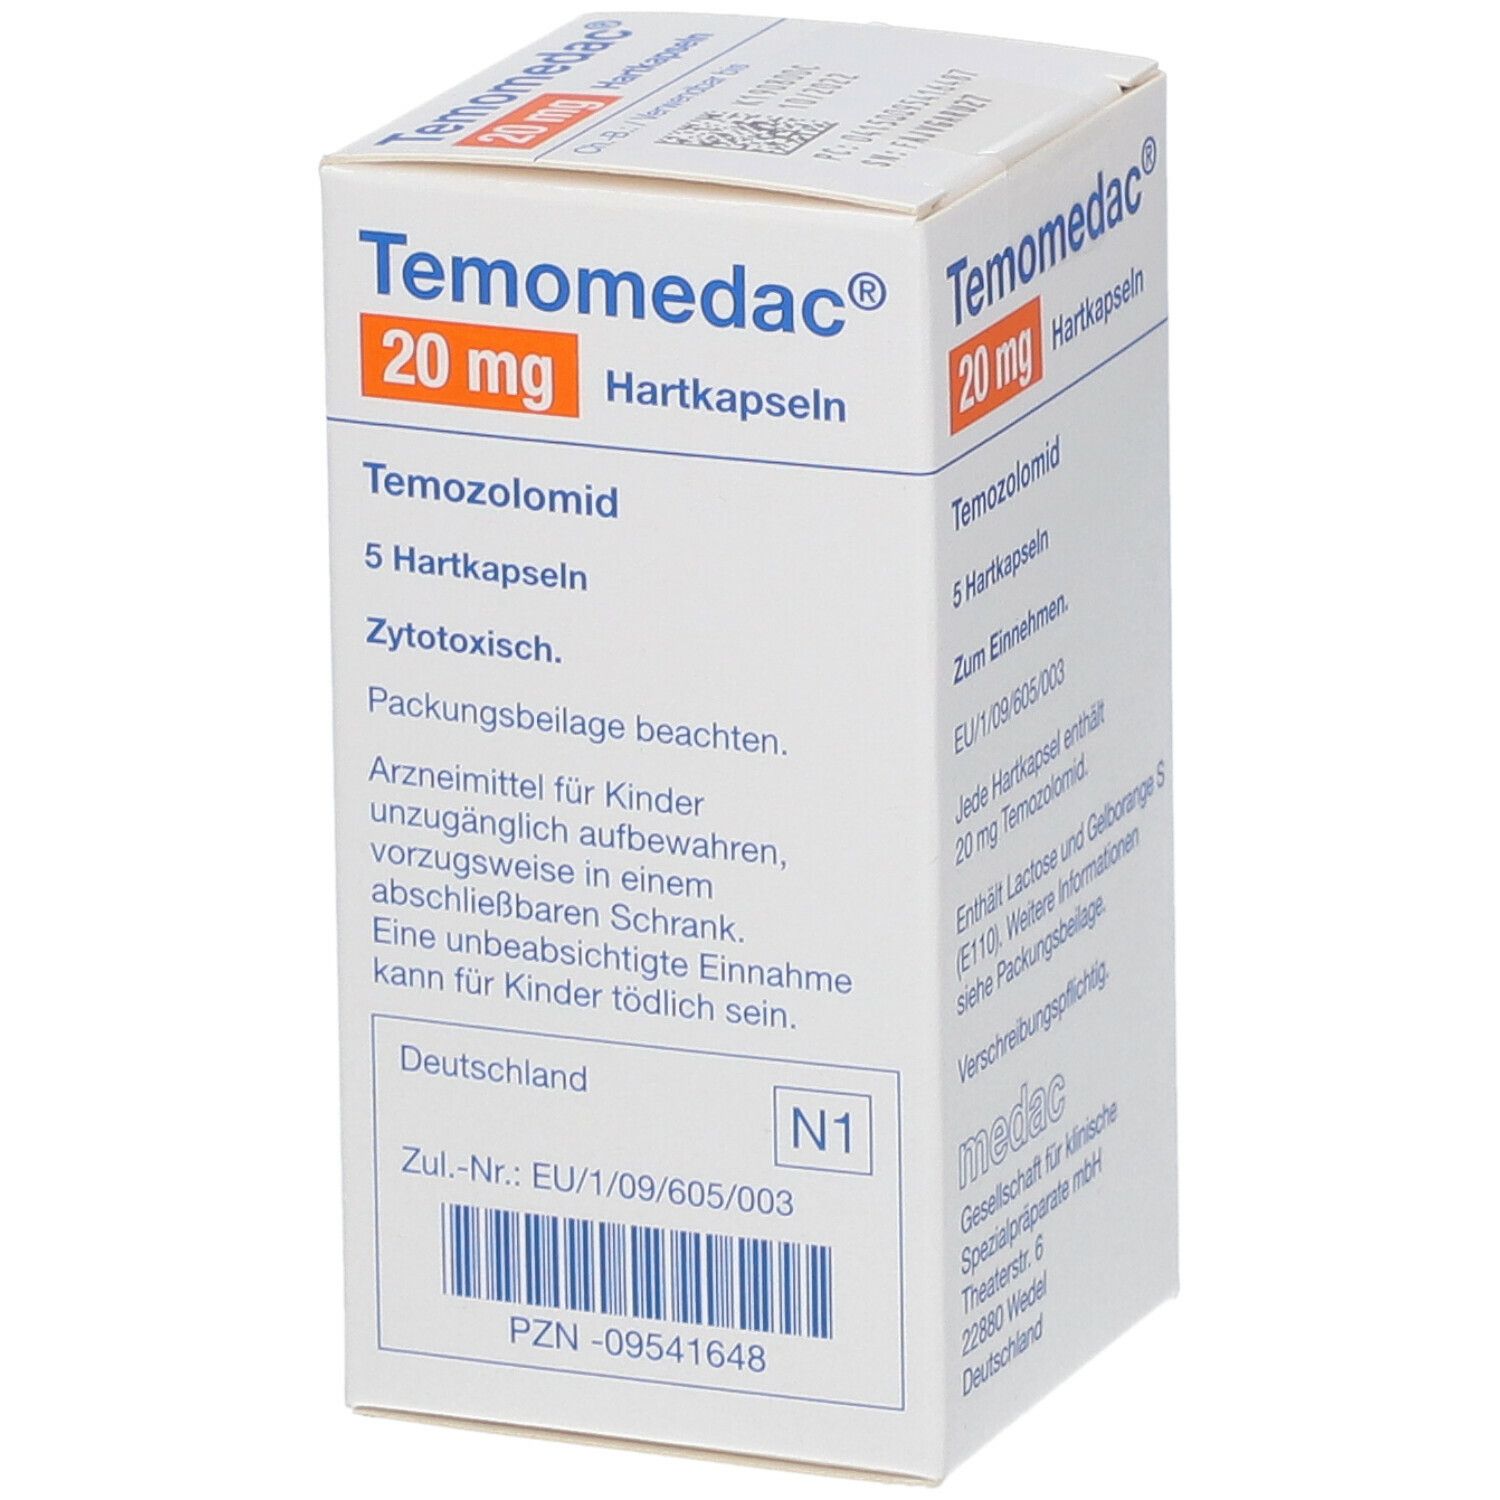 Temomedac® 20 mg